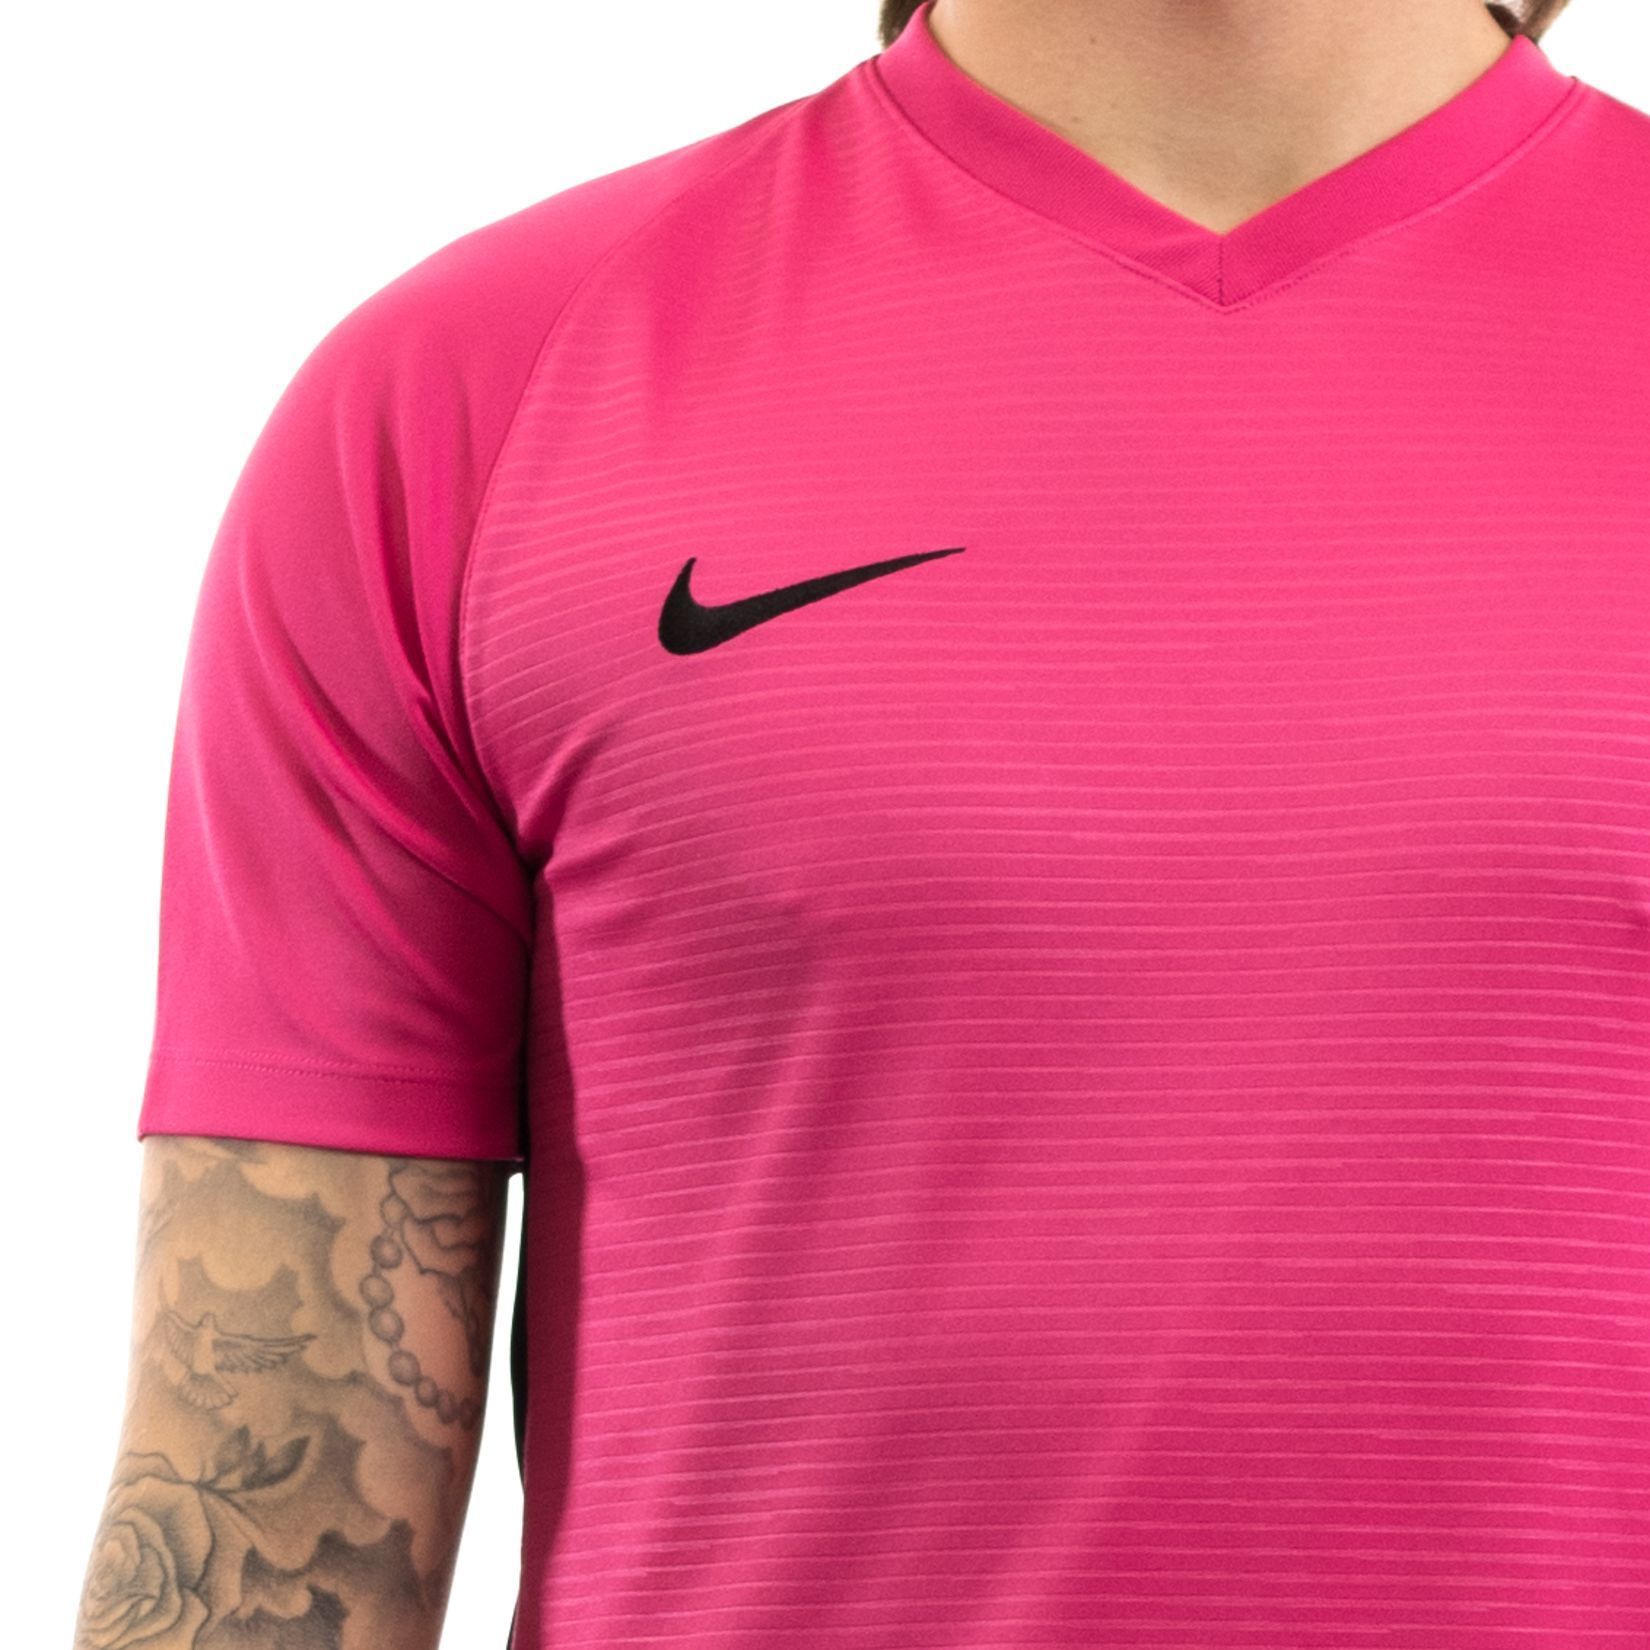 Nike Tiempo Premier Short Sleeve Shirt - Kitlocker.com